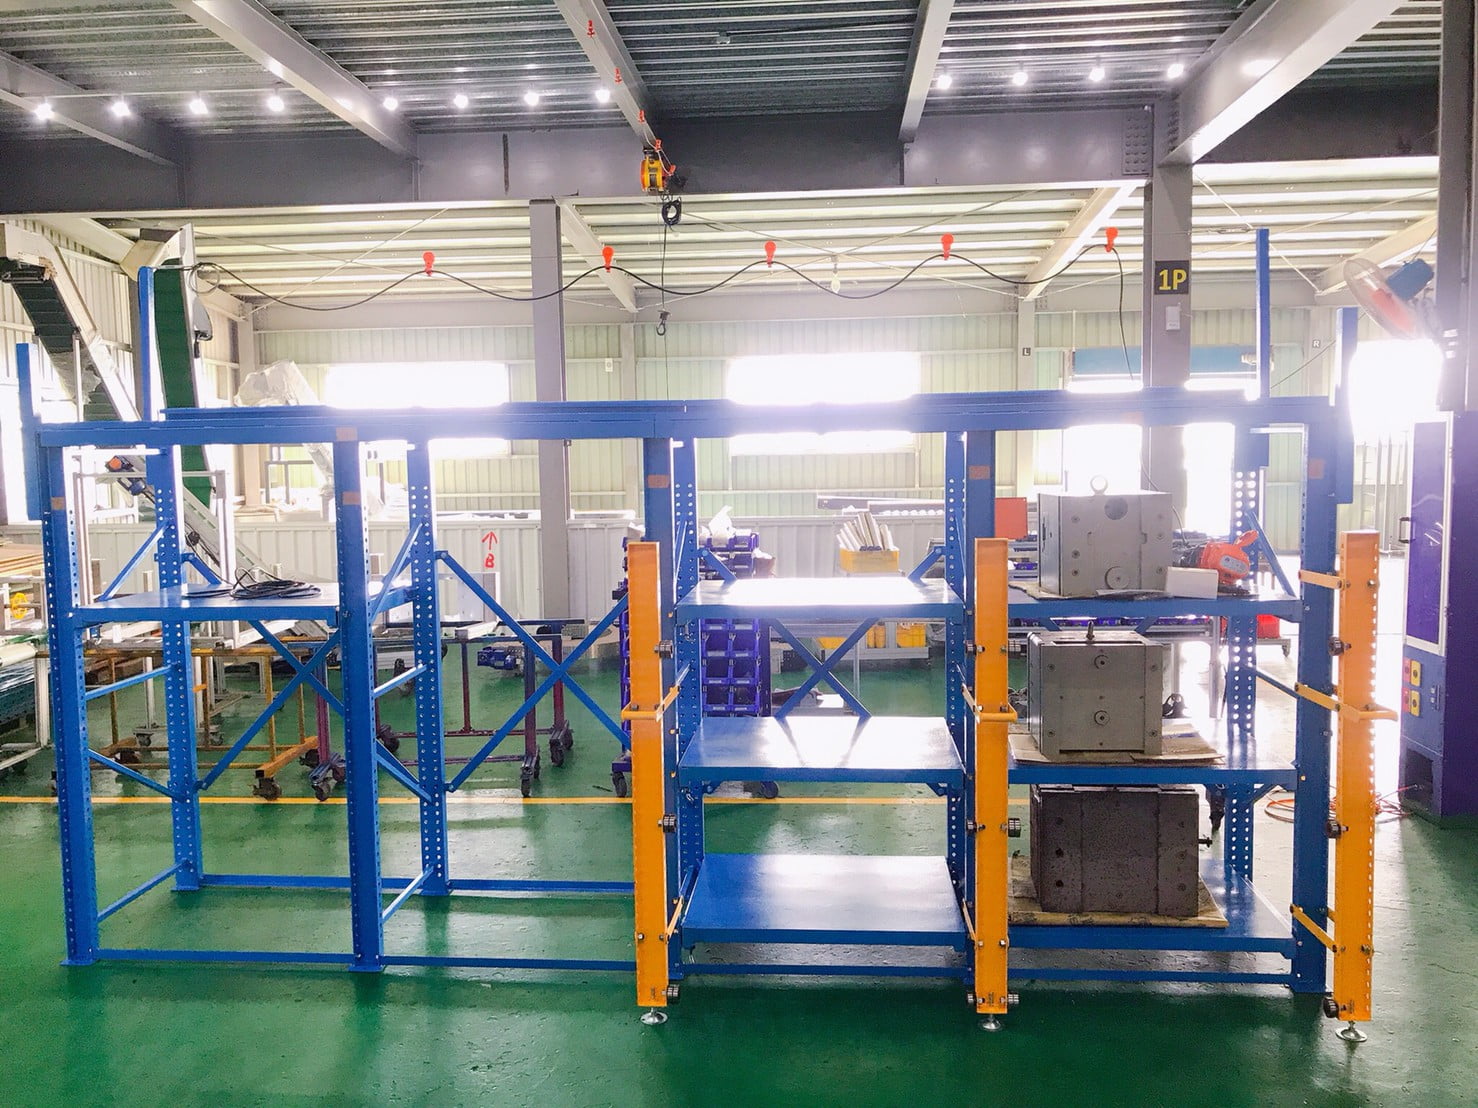 1000KG Special Storage Racks With Folded Pole -Lichen Conveyor Automatic Equipment Co., Ltd. 